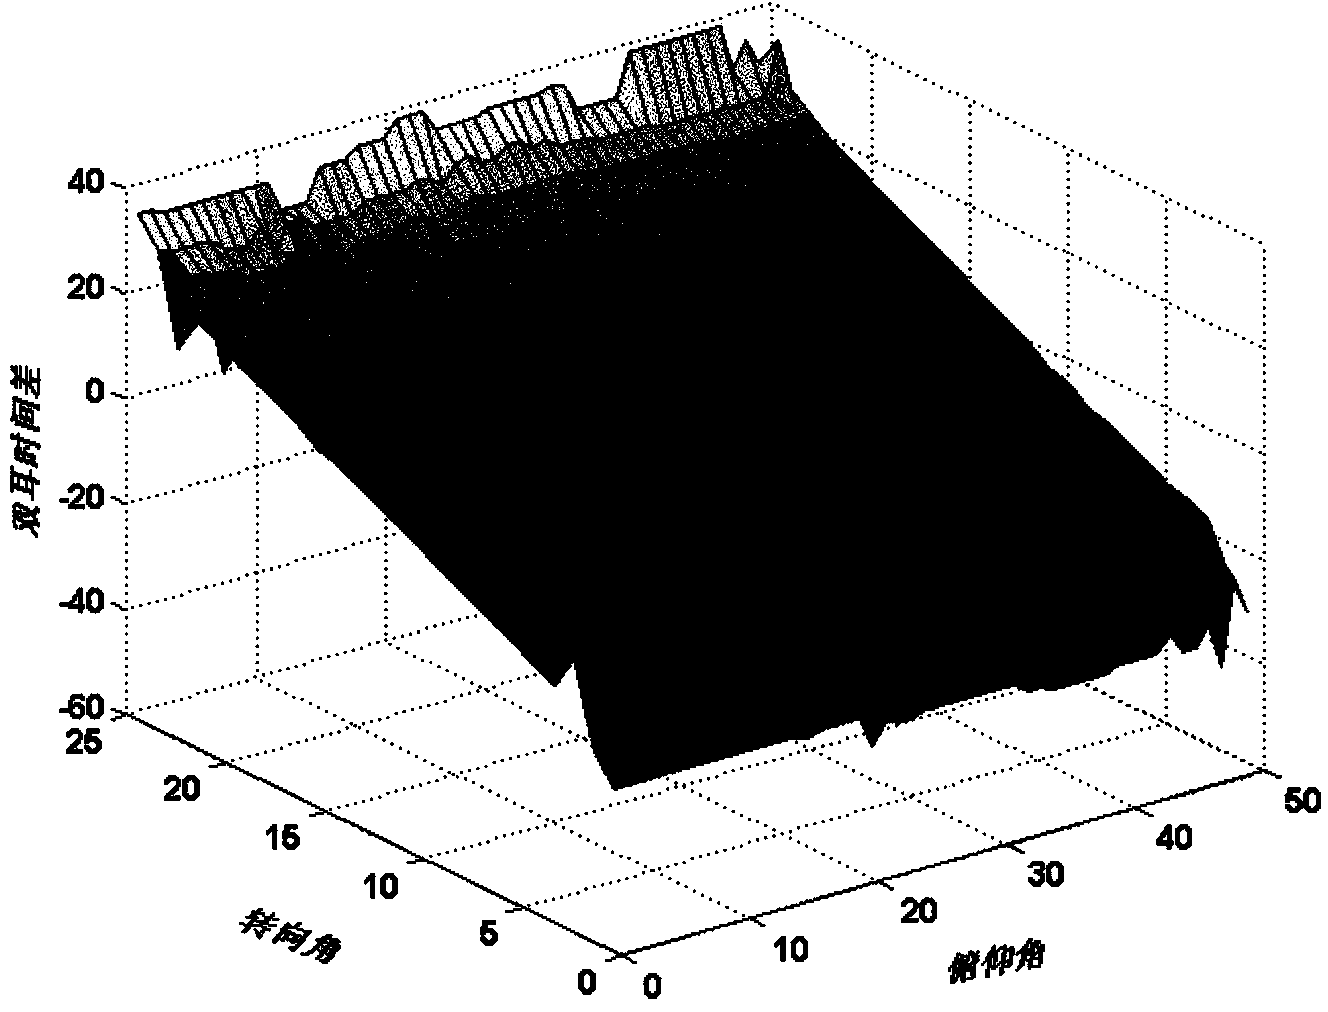 Binaural sound source positioning method based on binaural matching filter